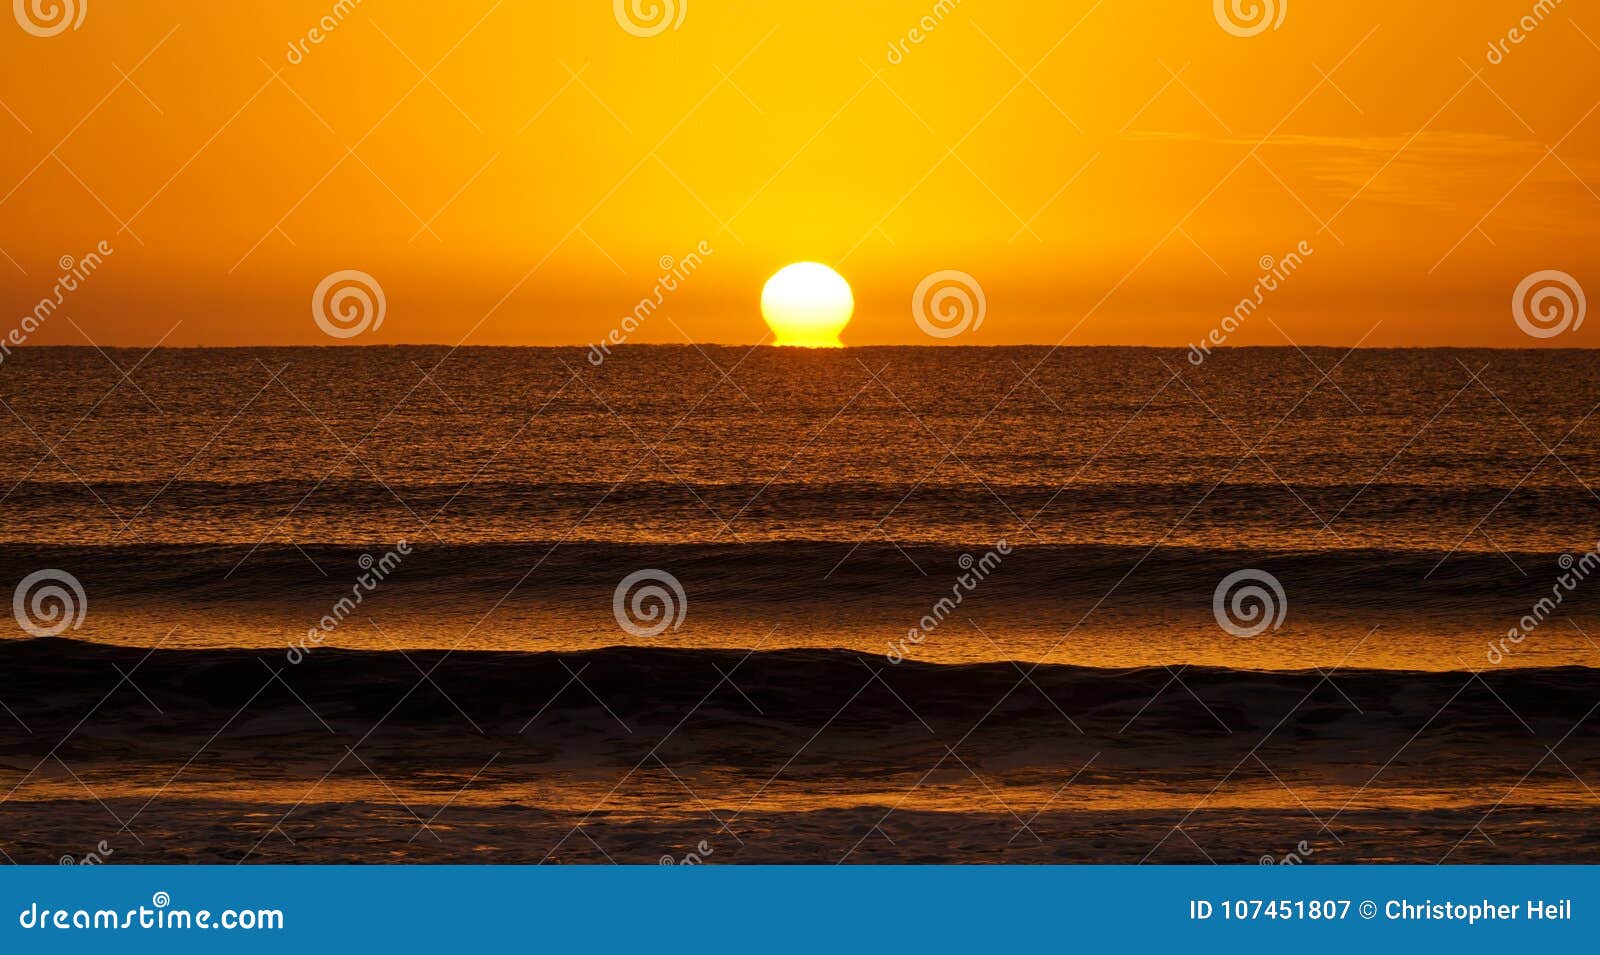 sunrise in uruguay